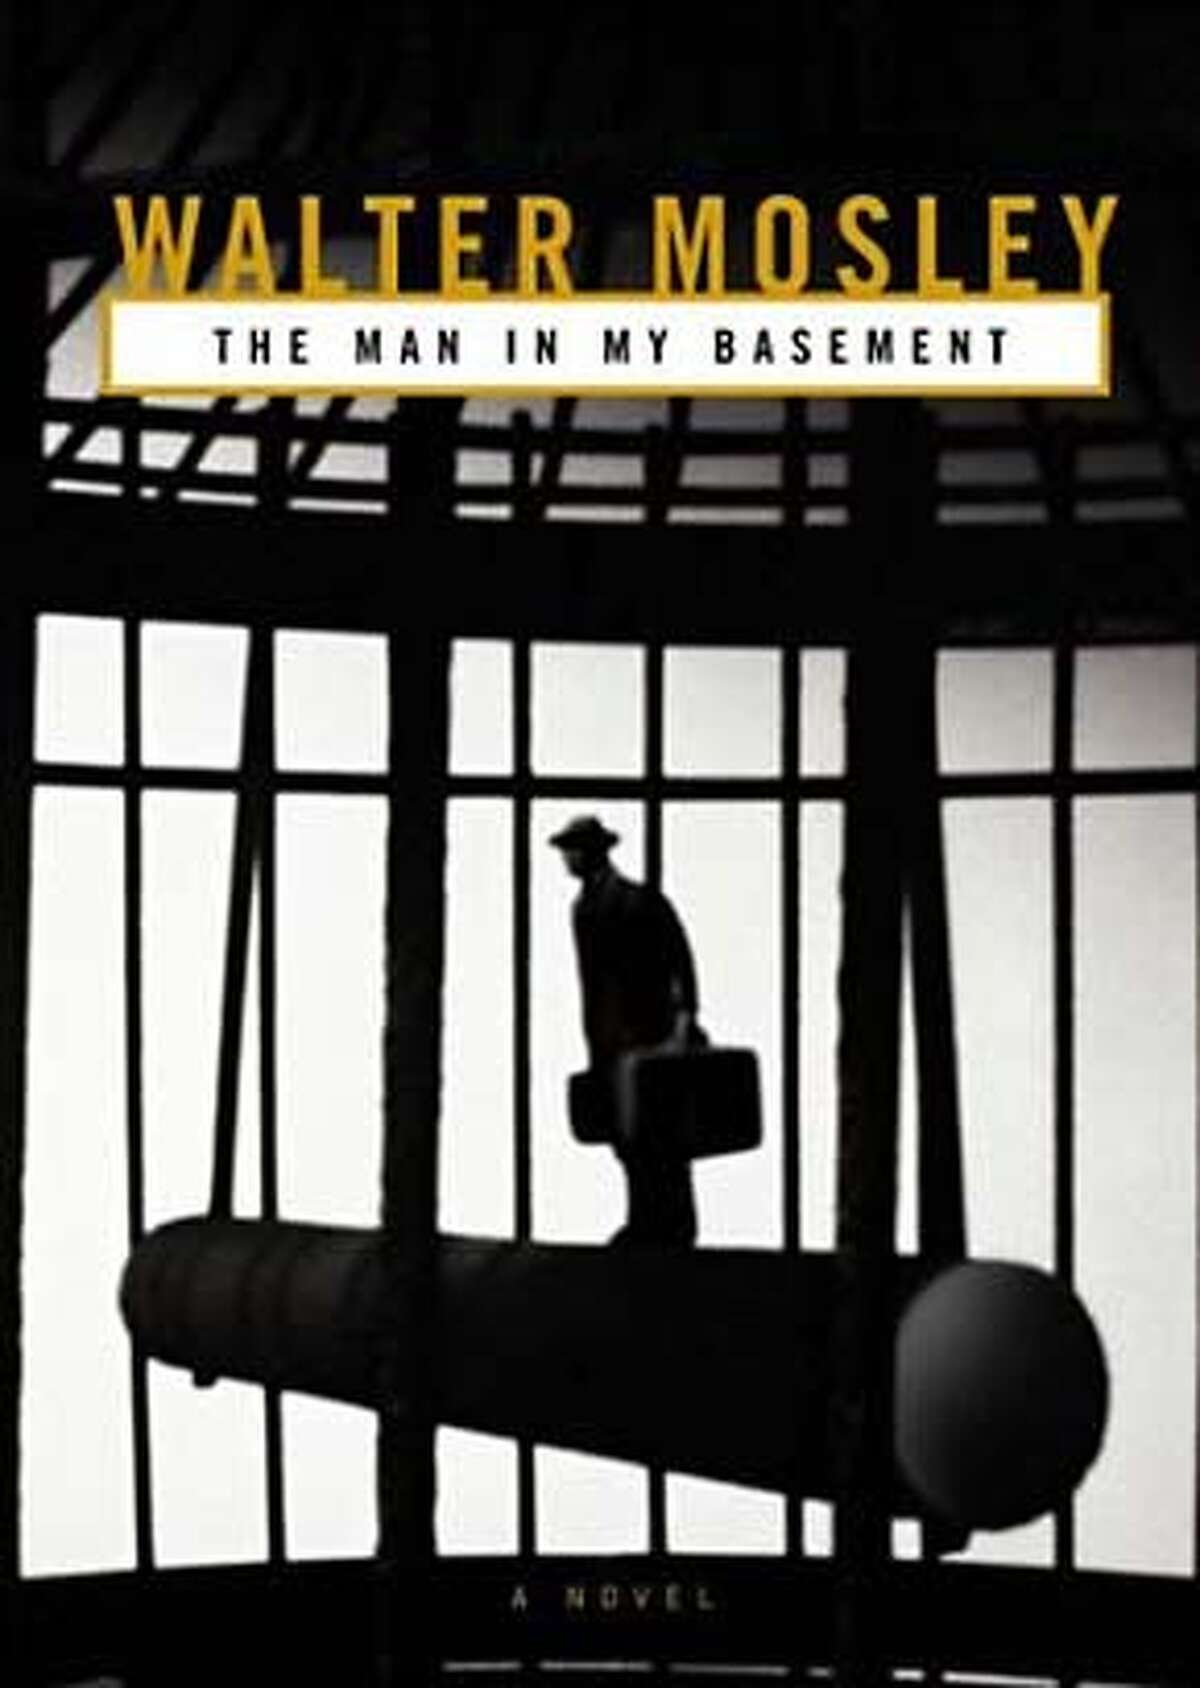 / for: Book Review slug: EDREC11; Man in My Basement: / HO